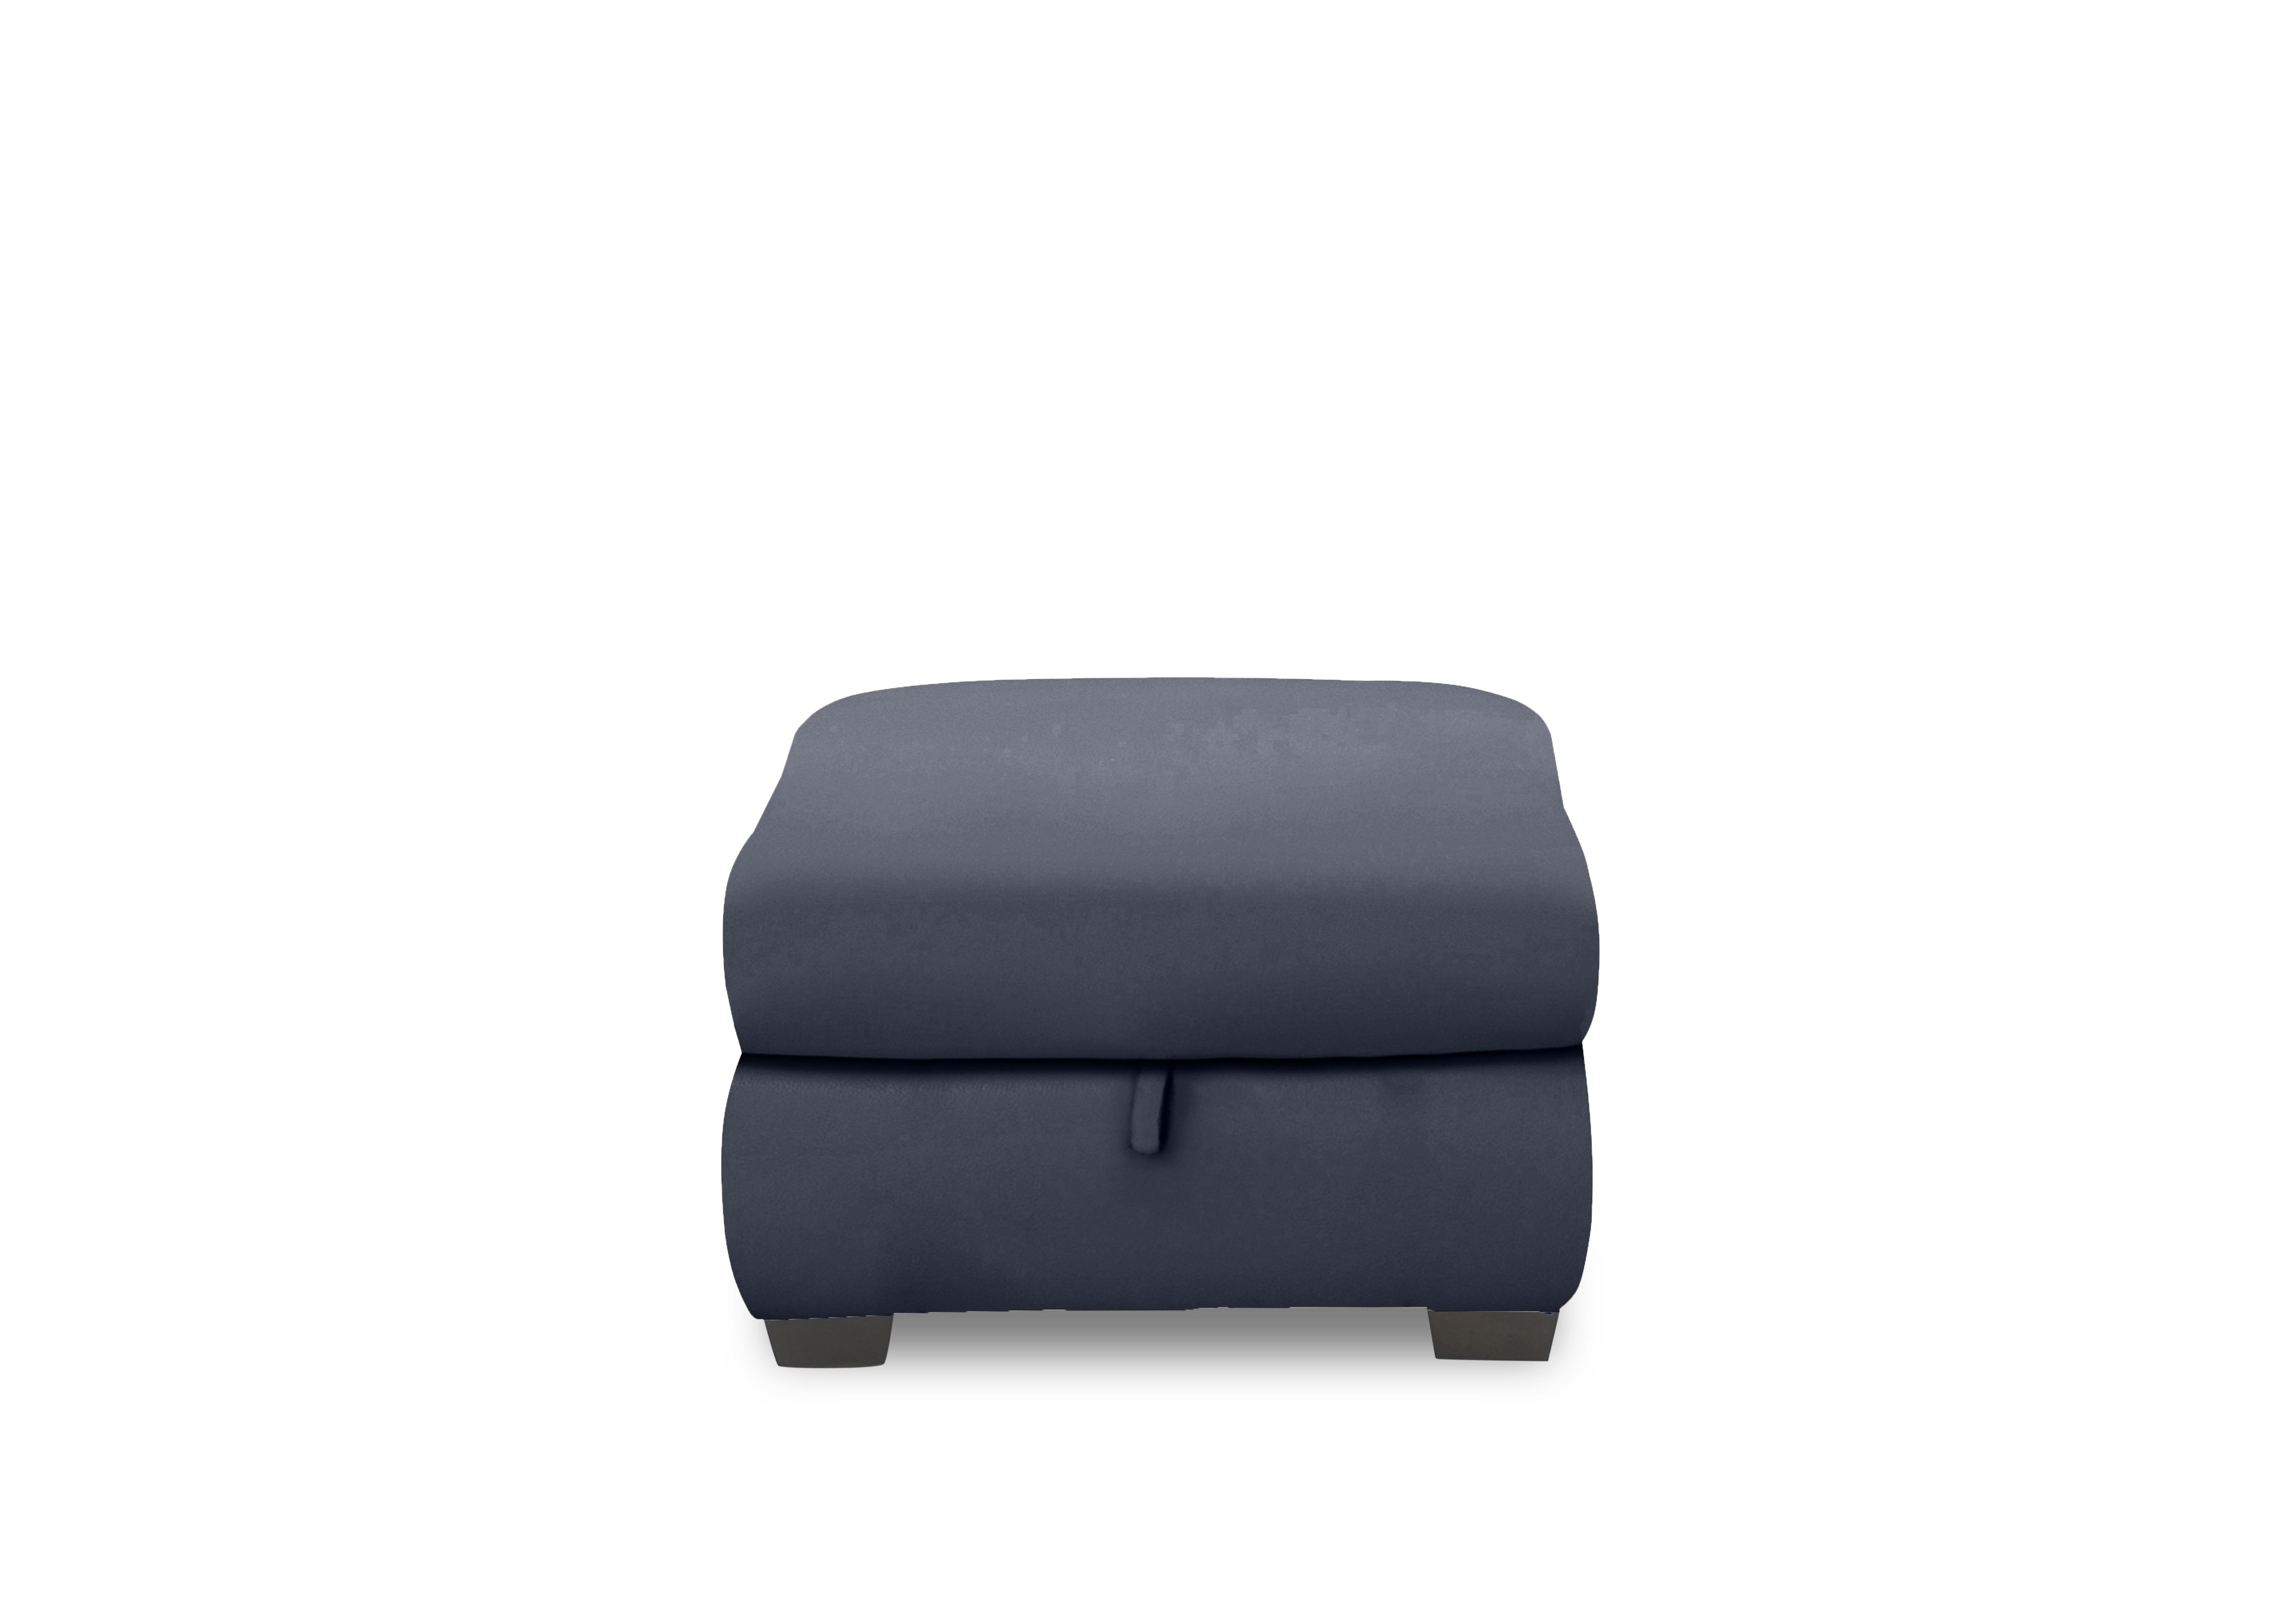 Nixon Leather Storage Footstool in Bv-313e Ocean Blue on Furniture Village